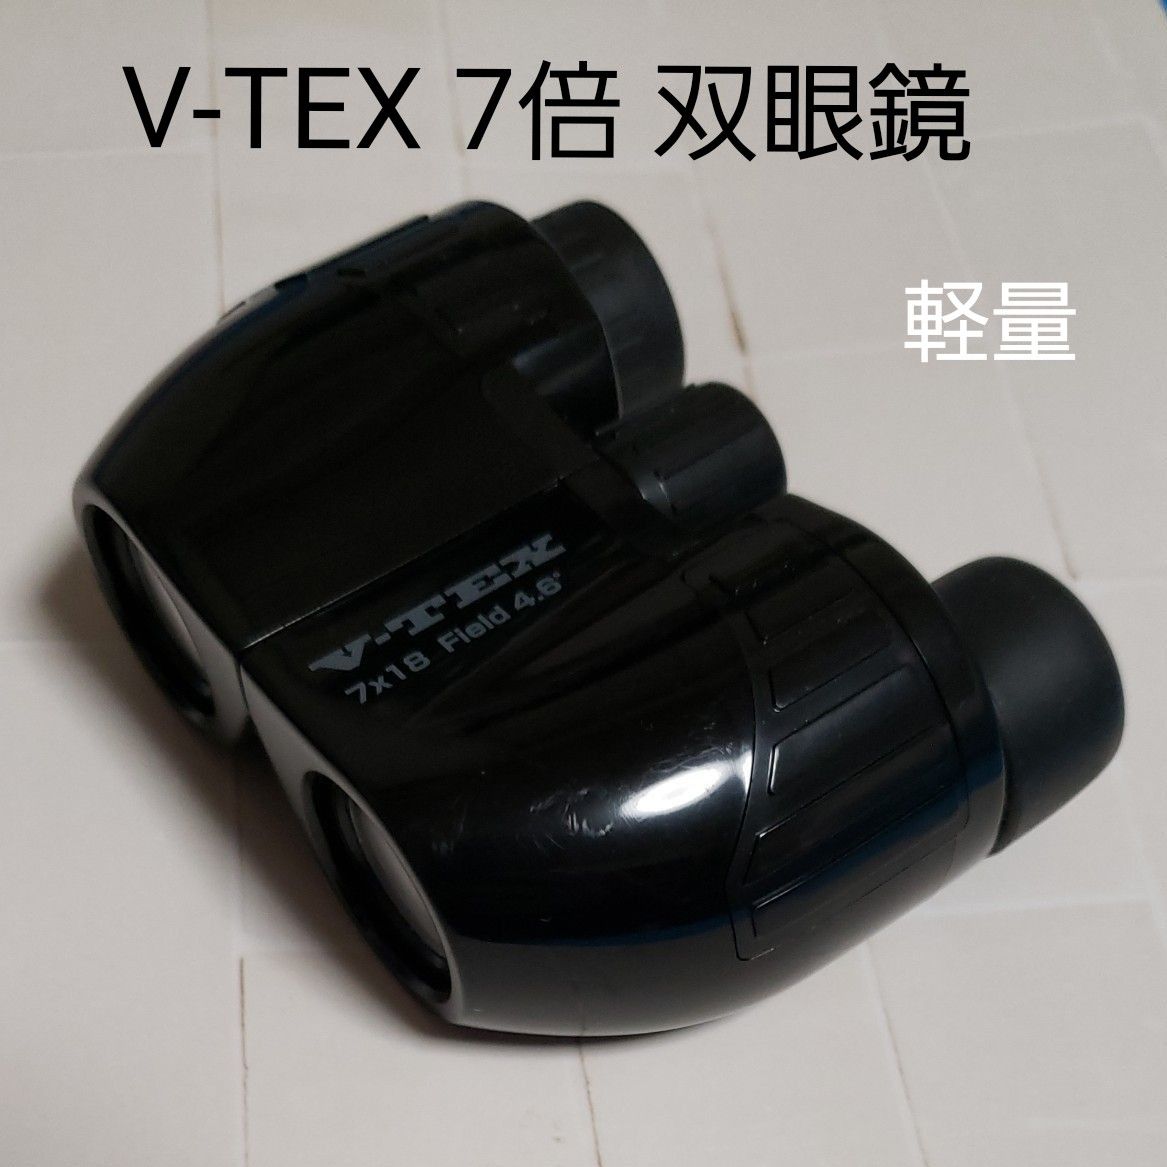 V-TEX 双眼鏡 ブラック 黒 7倍 VT-7018BK 小型 軽量 携帯 オペラグラス スコープ Kenko ケンコー